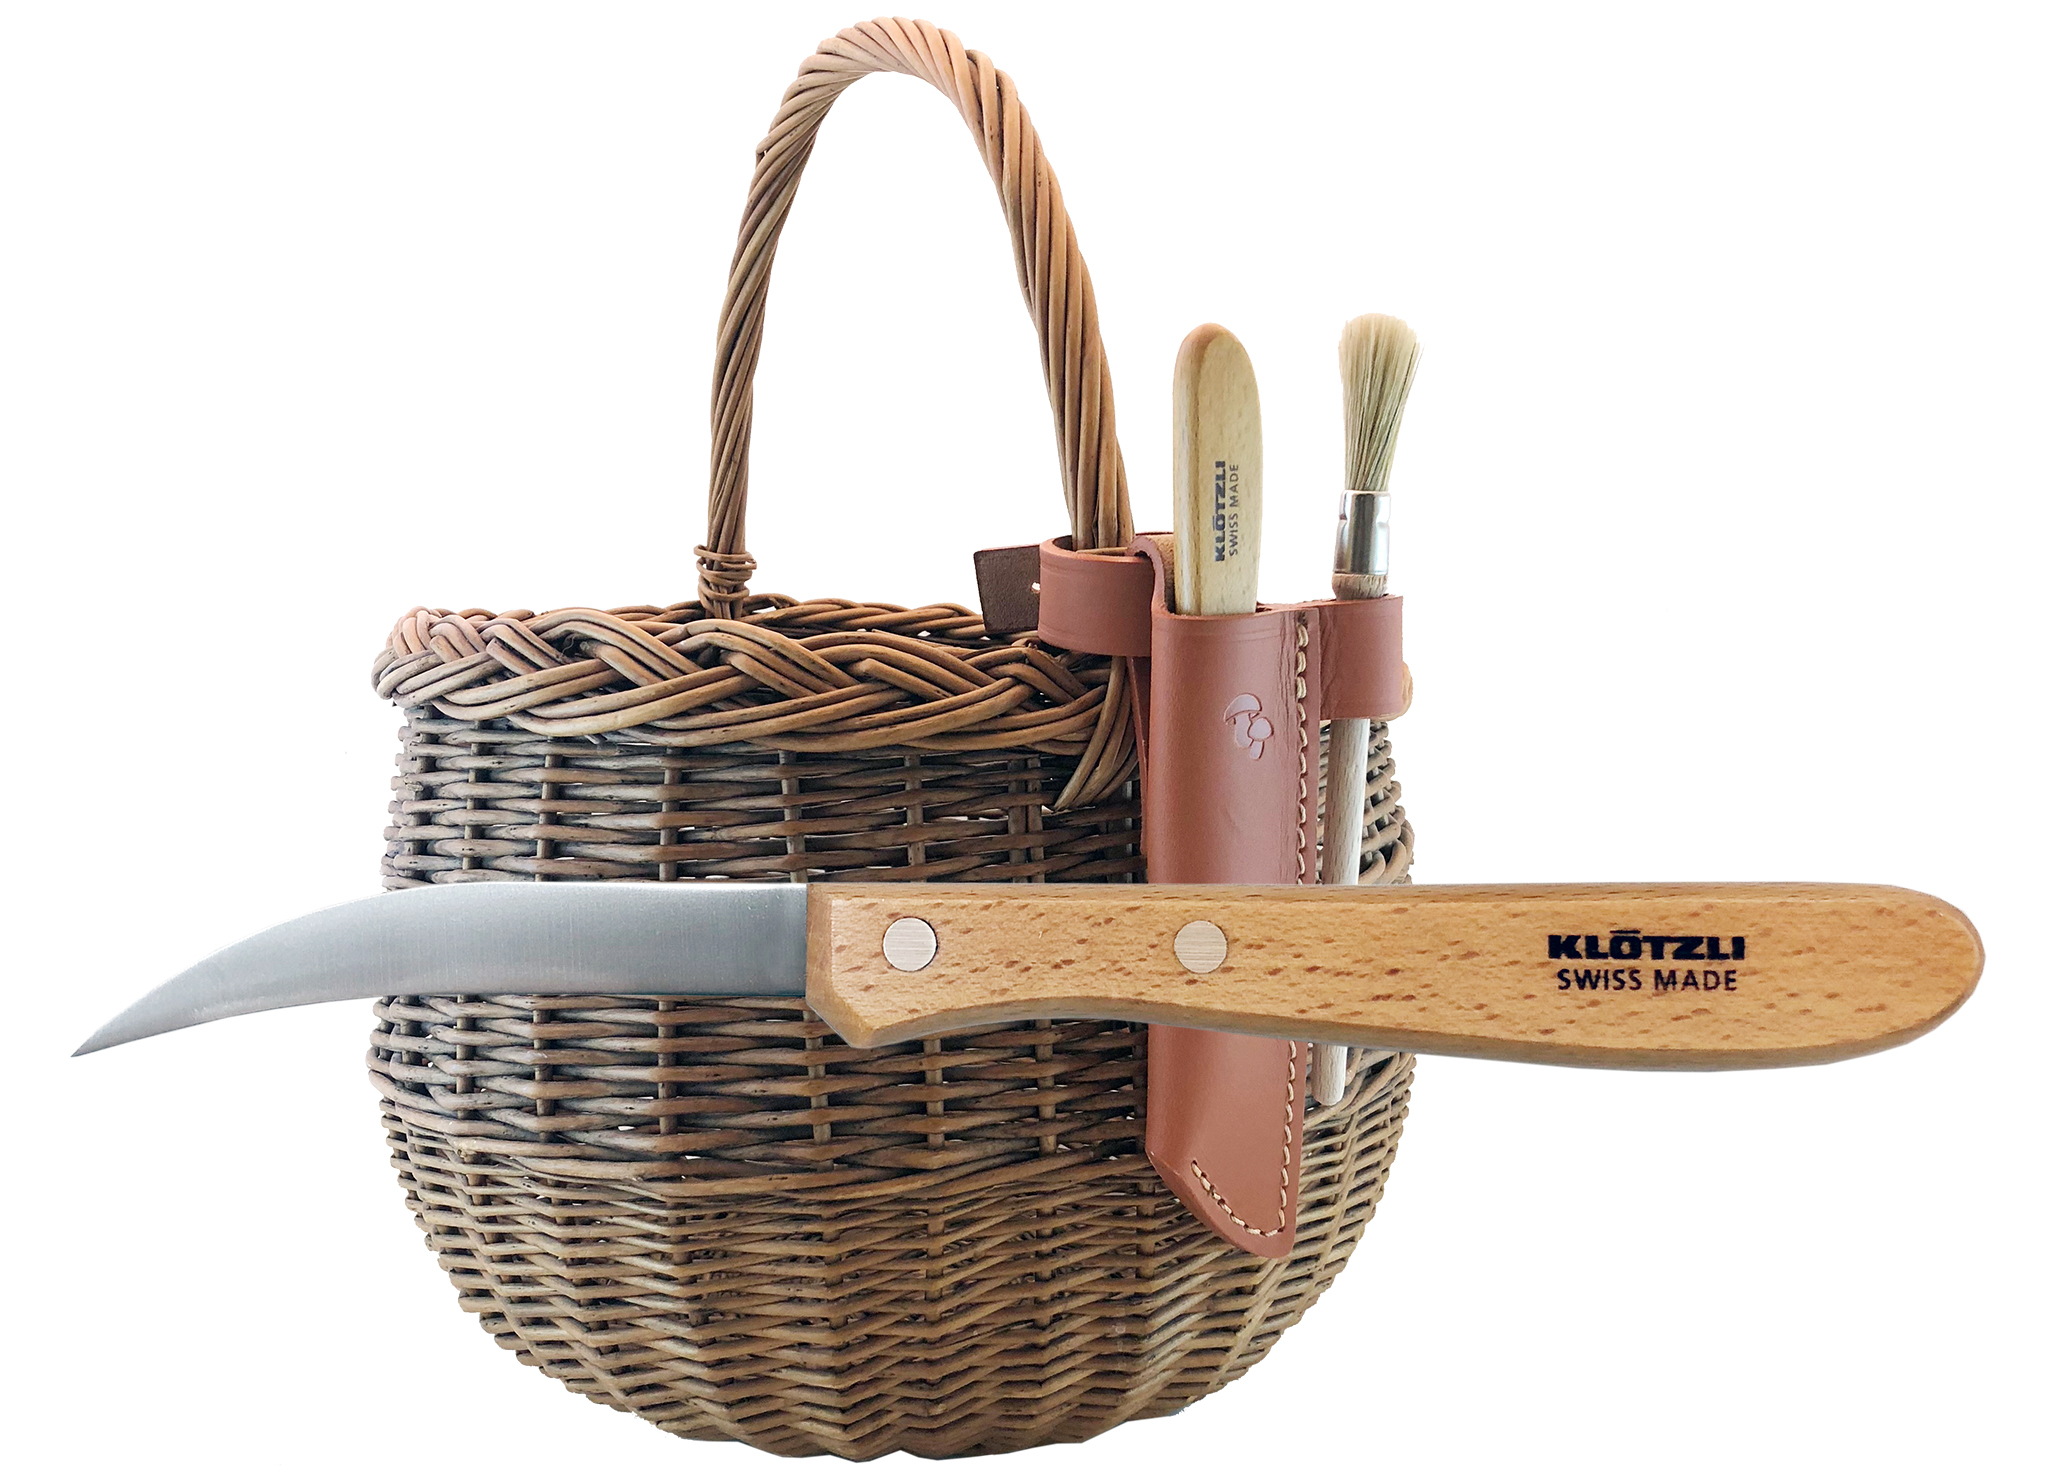 Klötzli Mushroom Basket Knife, made in Switzerland